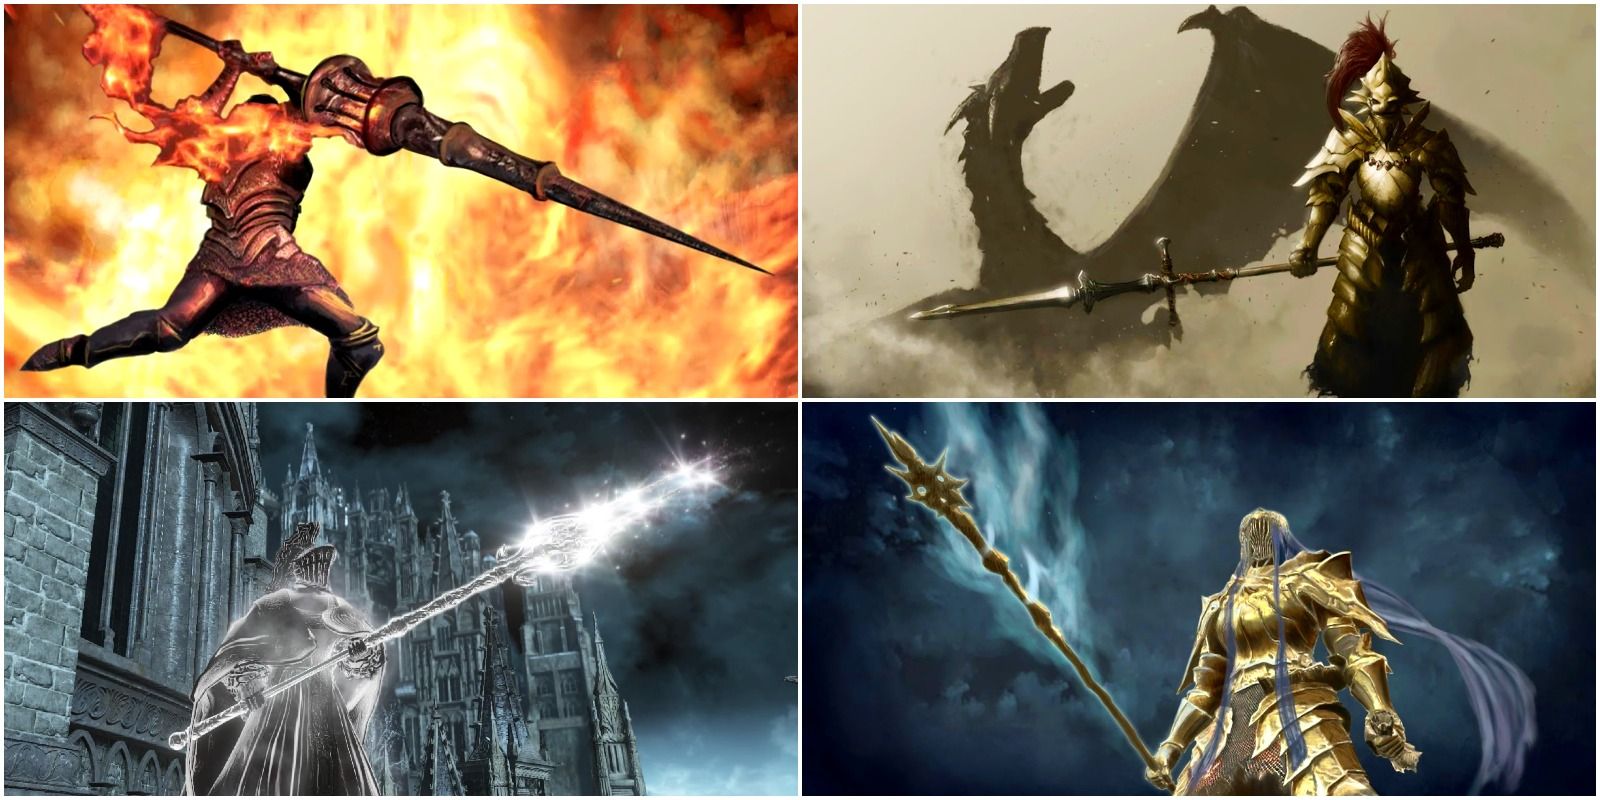 gargoyle flame spear, dragonslayer spear, saint bident, and golden ritual spear.